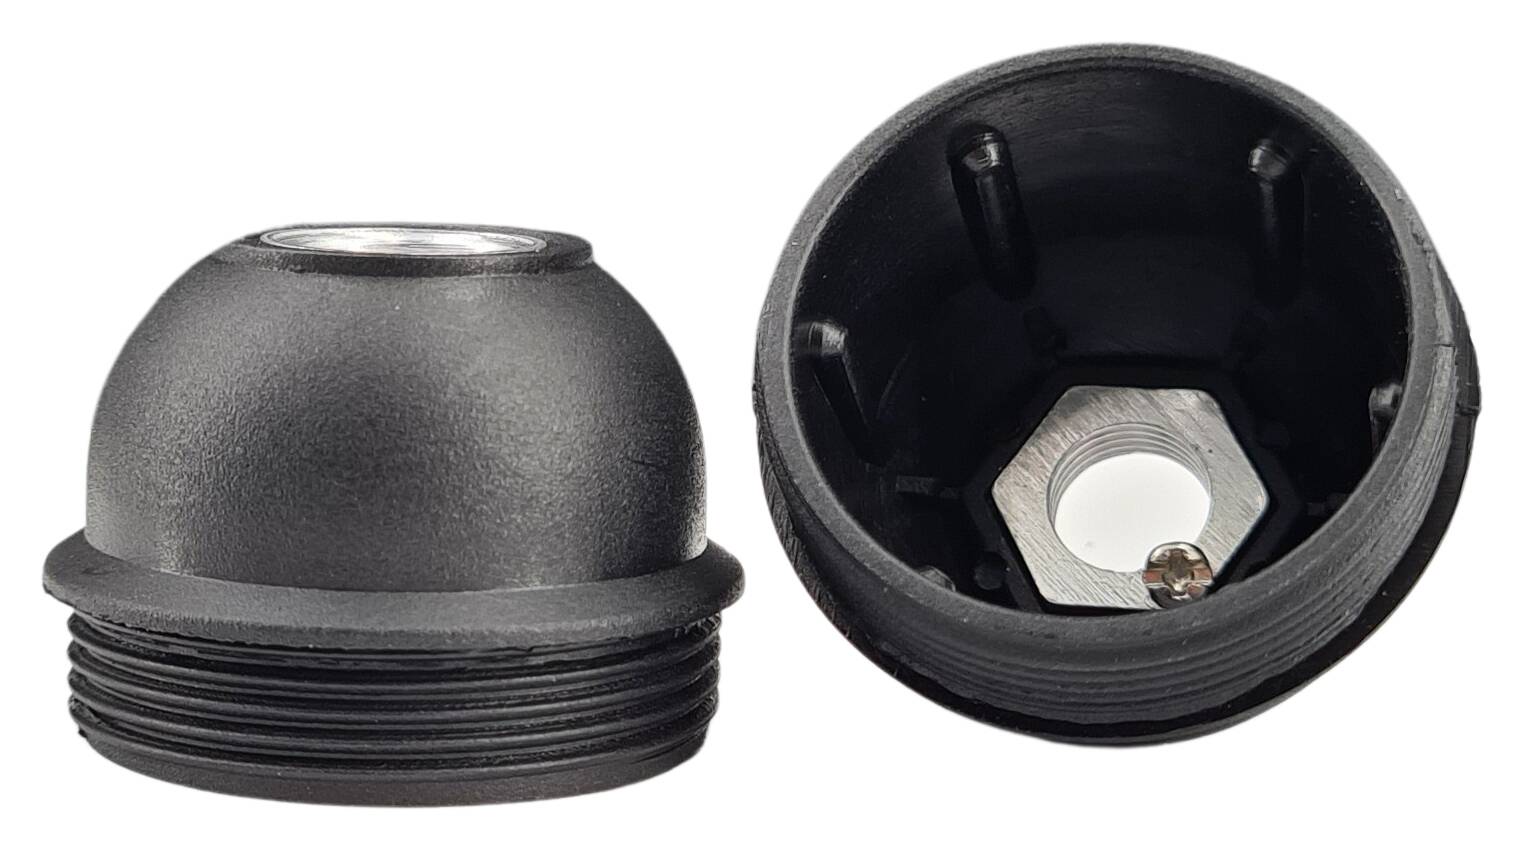 E27 cap for thermoplastic lampholder M10x1 iron thread black